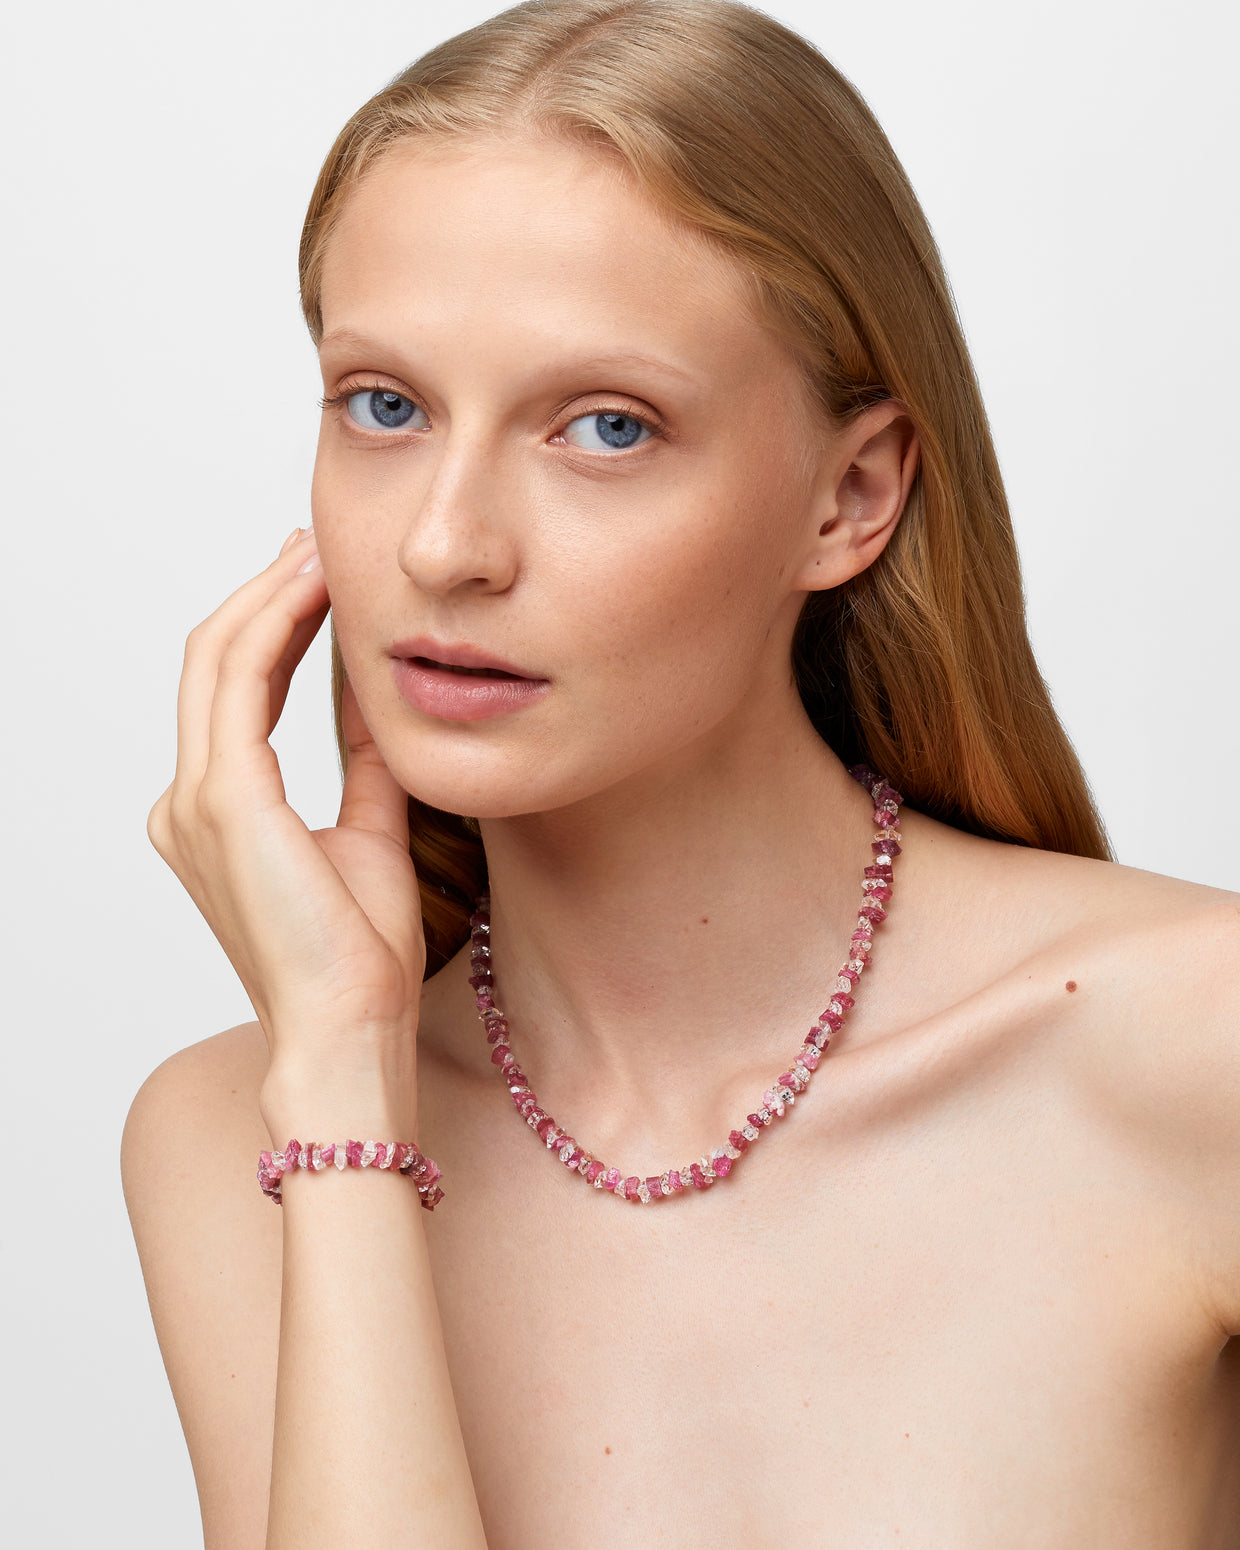 Gaia Pink Tourmaline and Herkimer Diamond Necklace